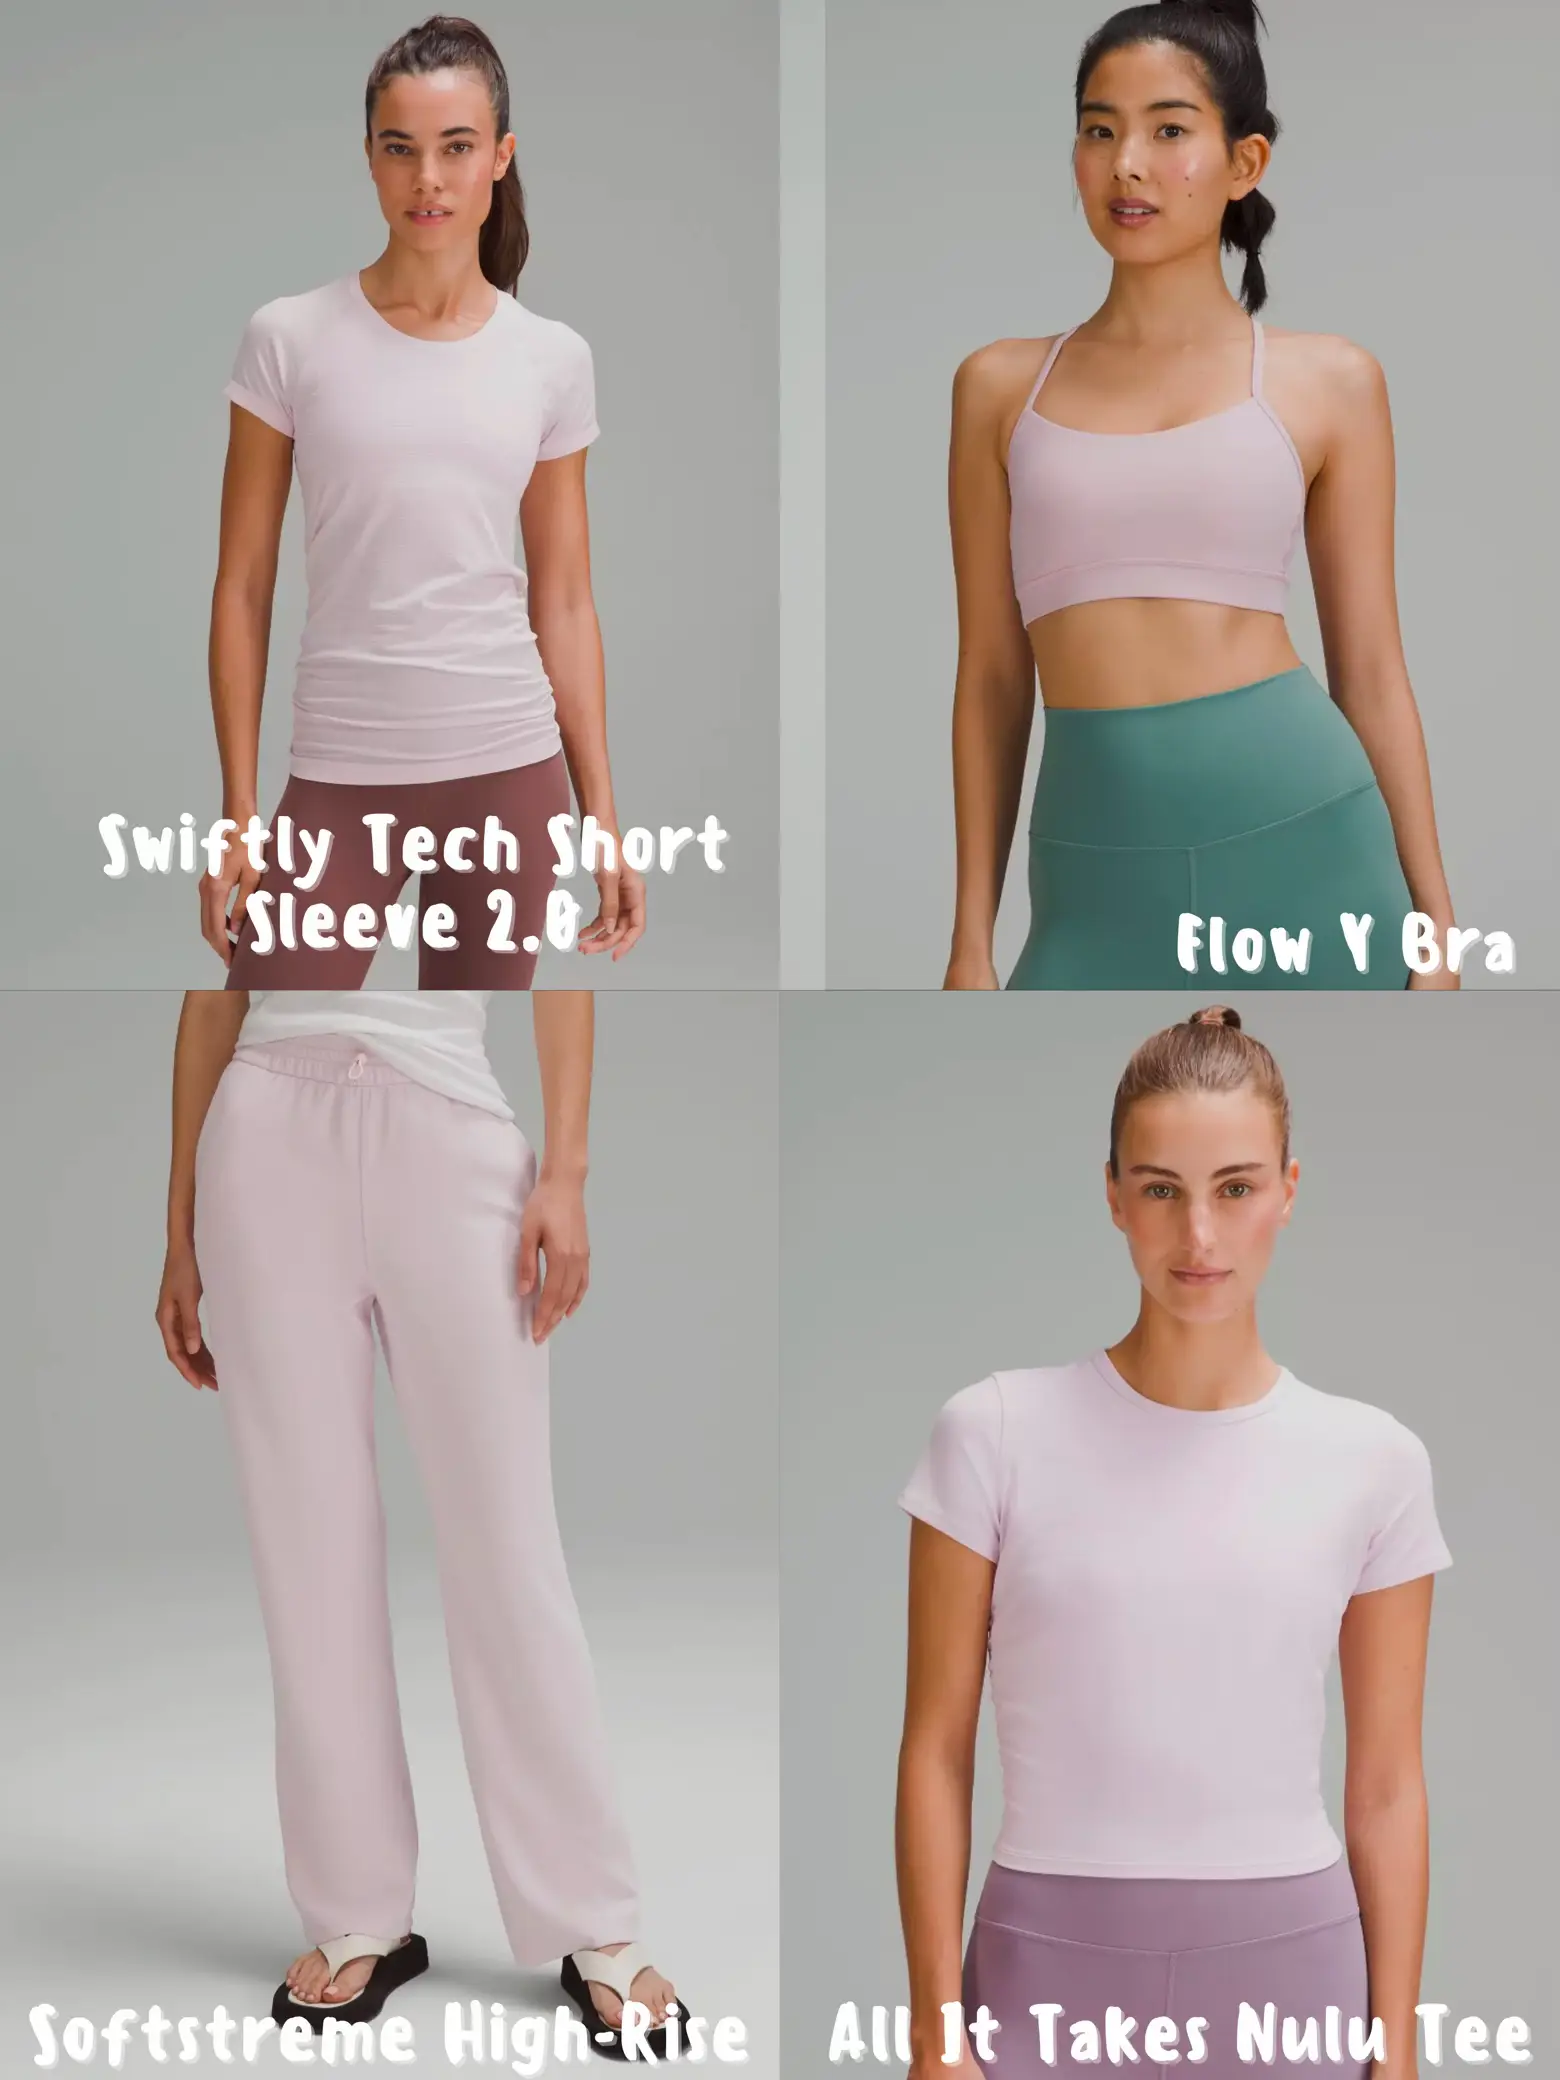 Lululemon Softstreme HR Shorts White Size 4 - $50 (35% Off Retail